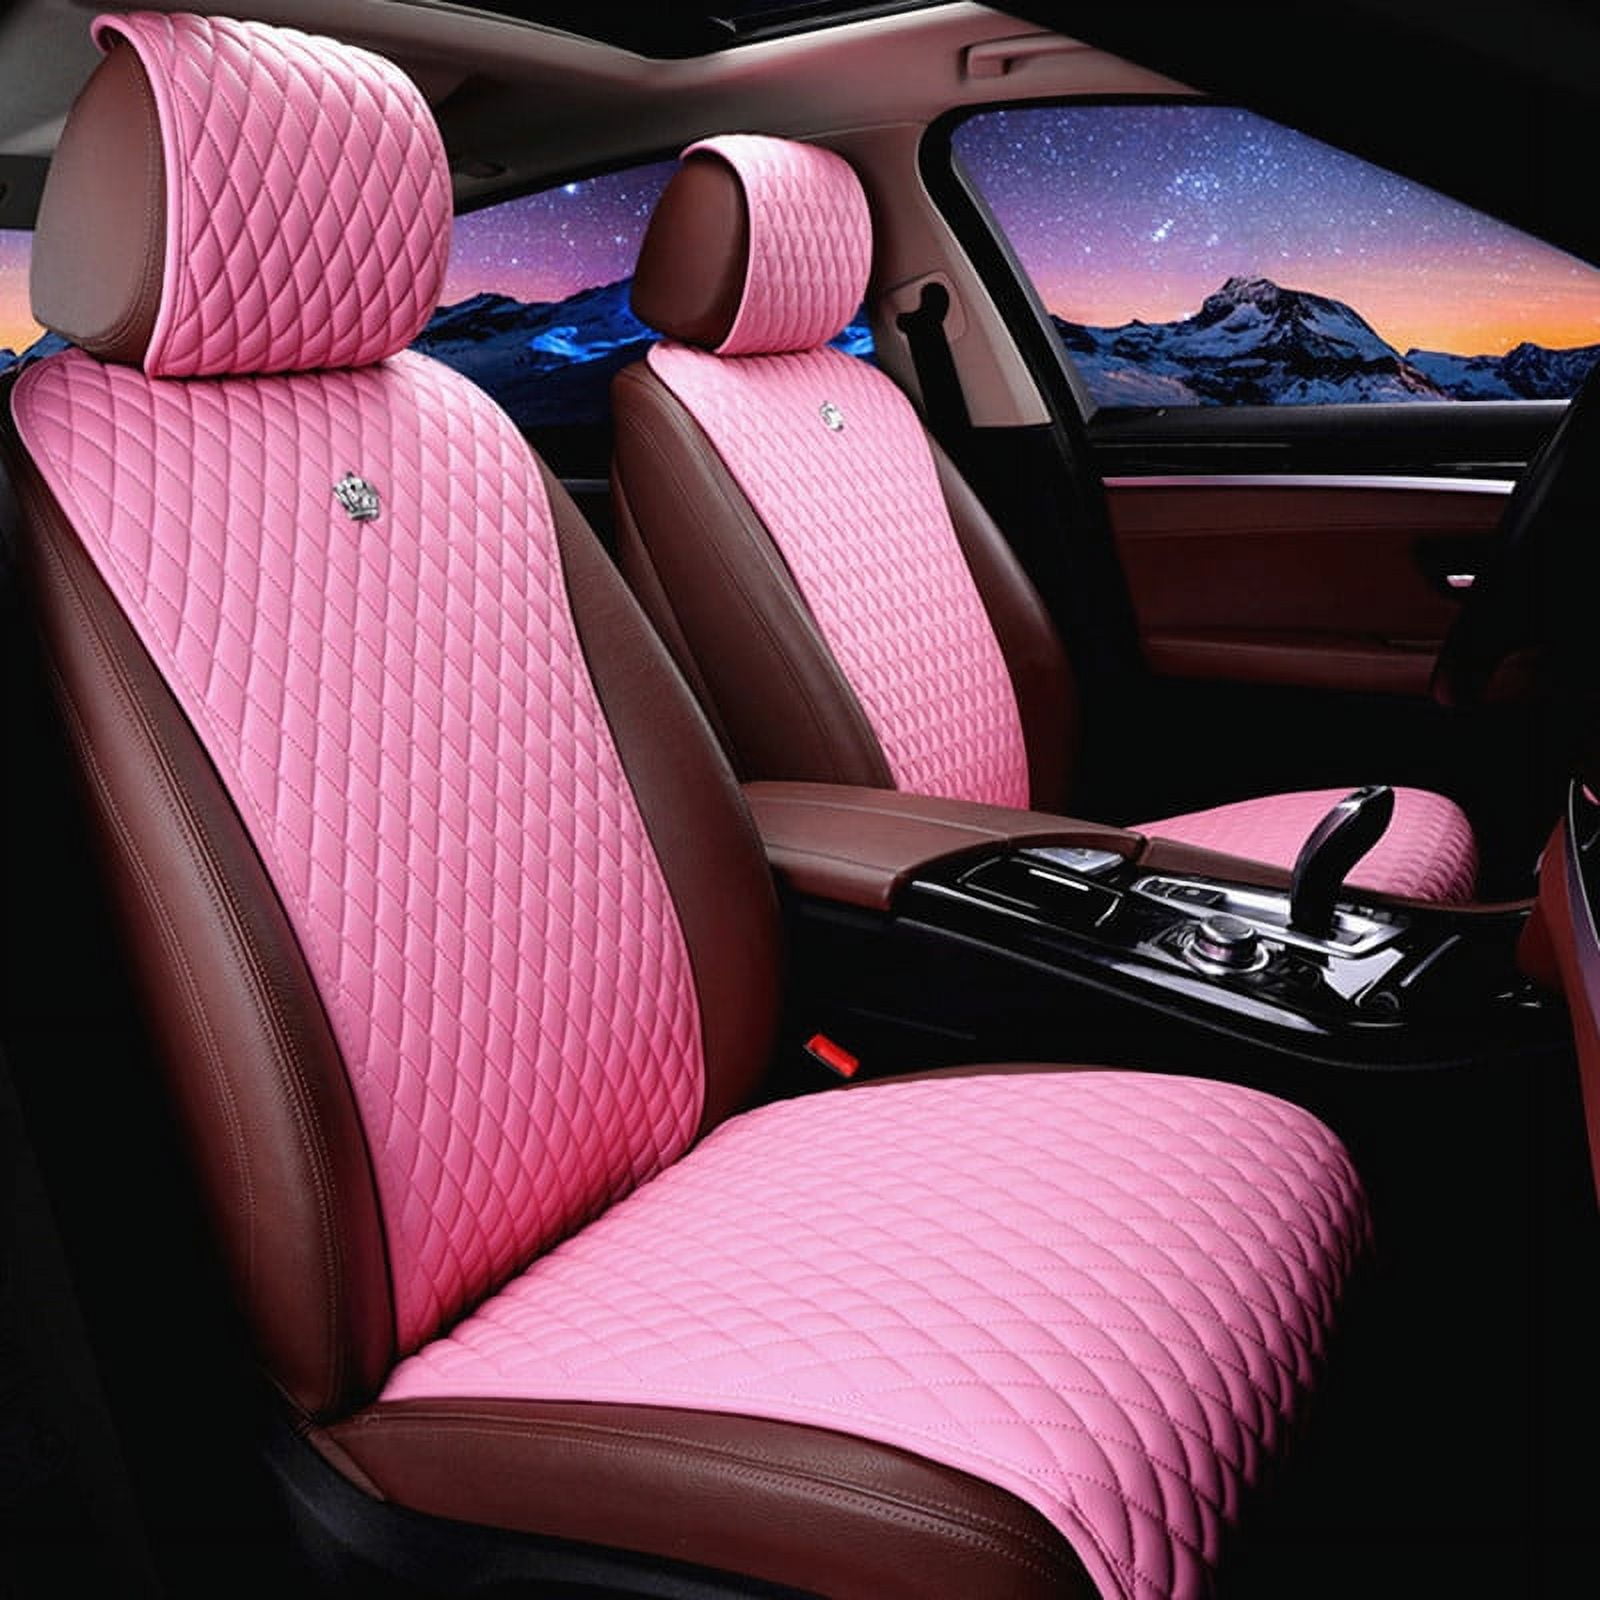 Plush Car Seat Cover Set Universal Pink Seat Cushion Auto Seat